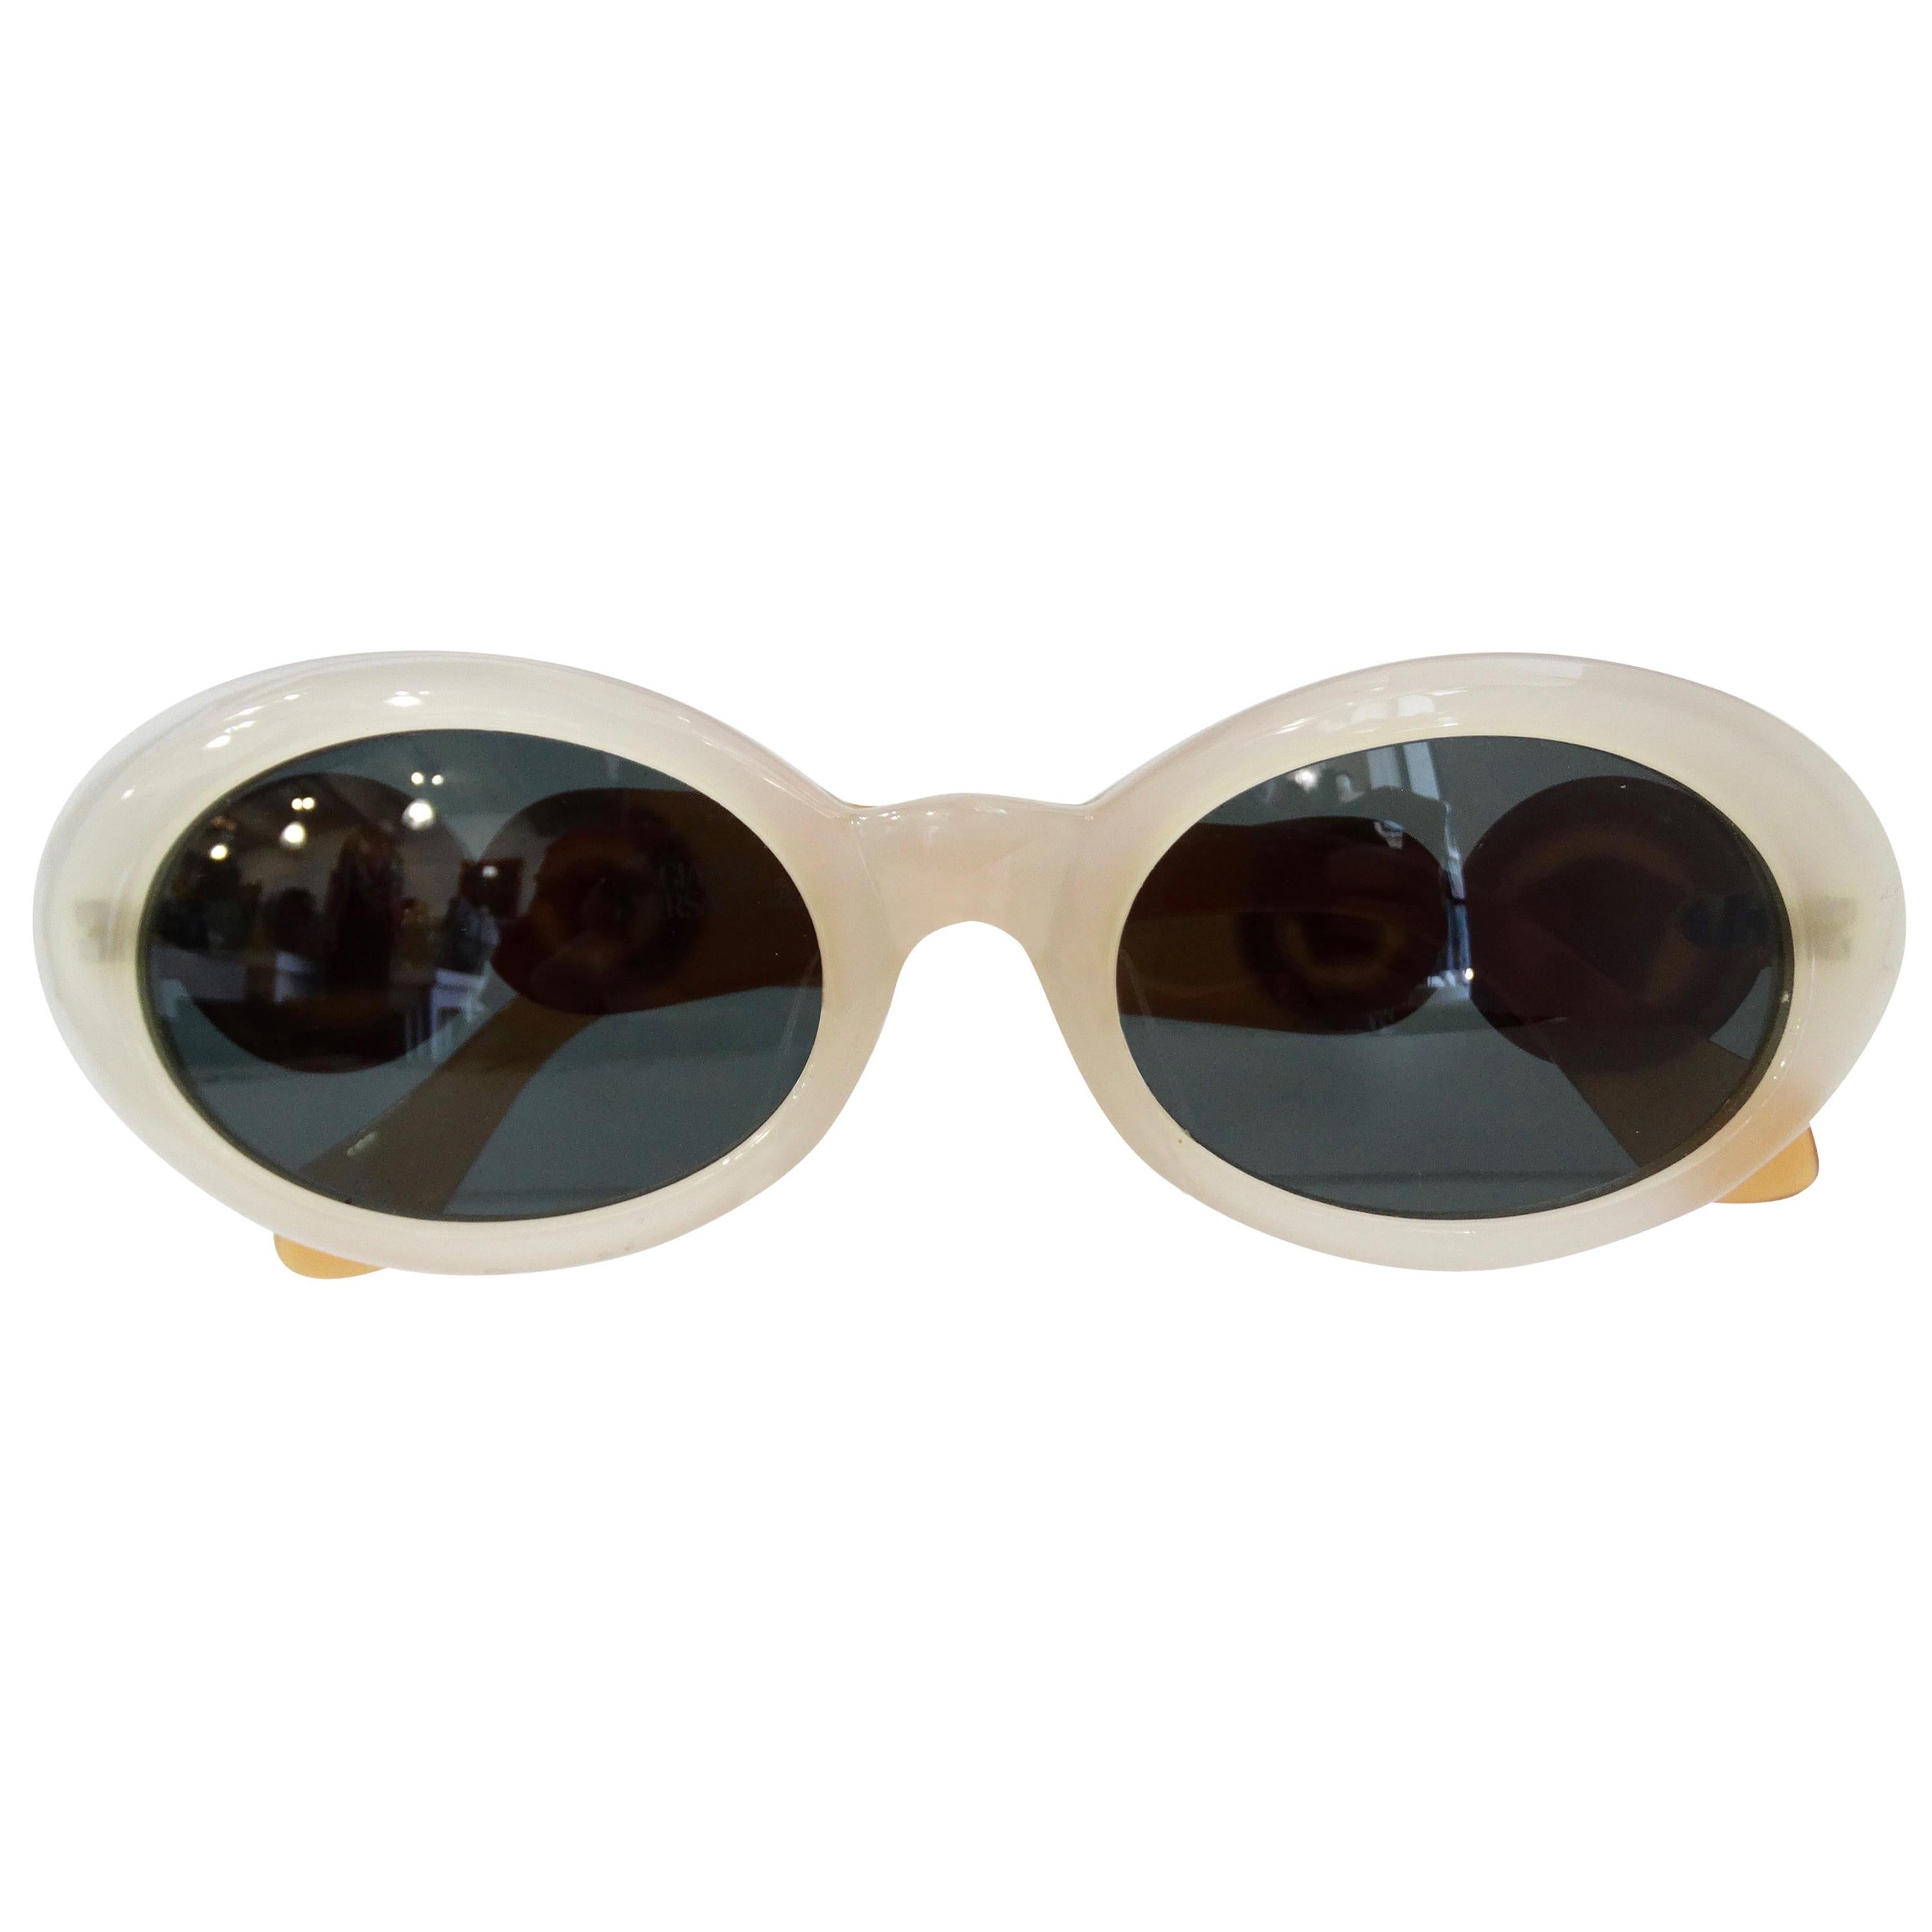 Gianni Versace 1990s Two-Tone Oval Sunglasses 